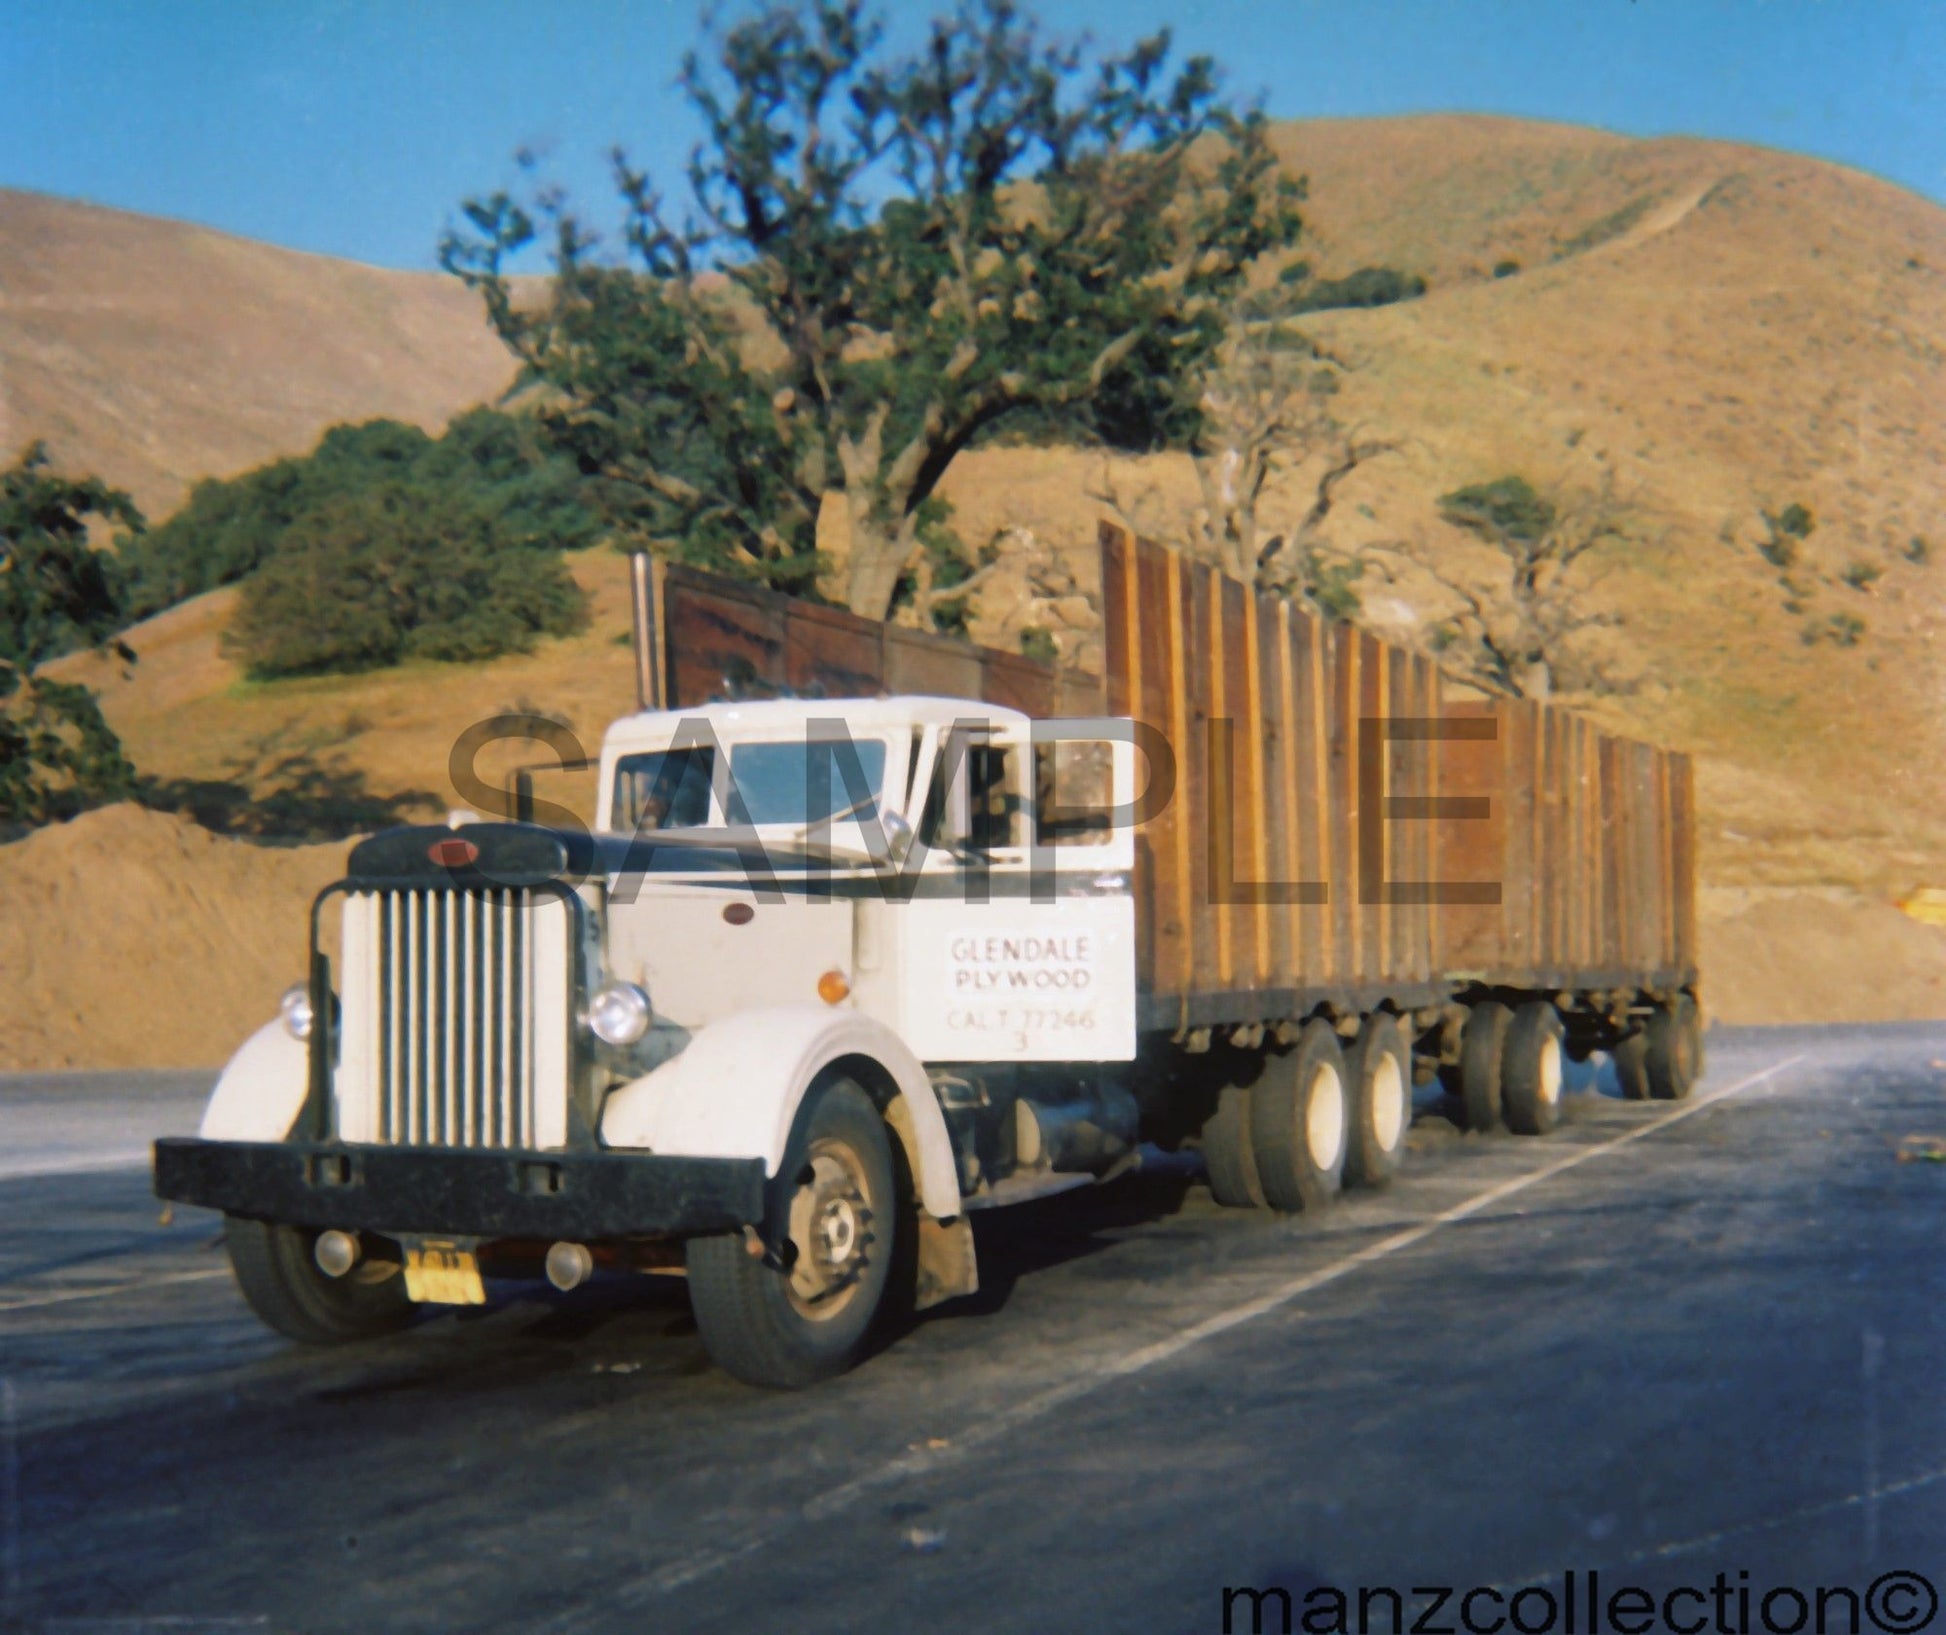 8x10 color semi-truck photo '50's Iron-nose Peterbilt GLENDALE PLYWOOD - Transportation Treasure